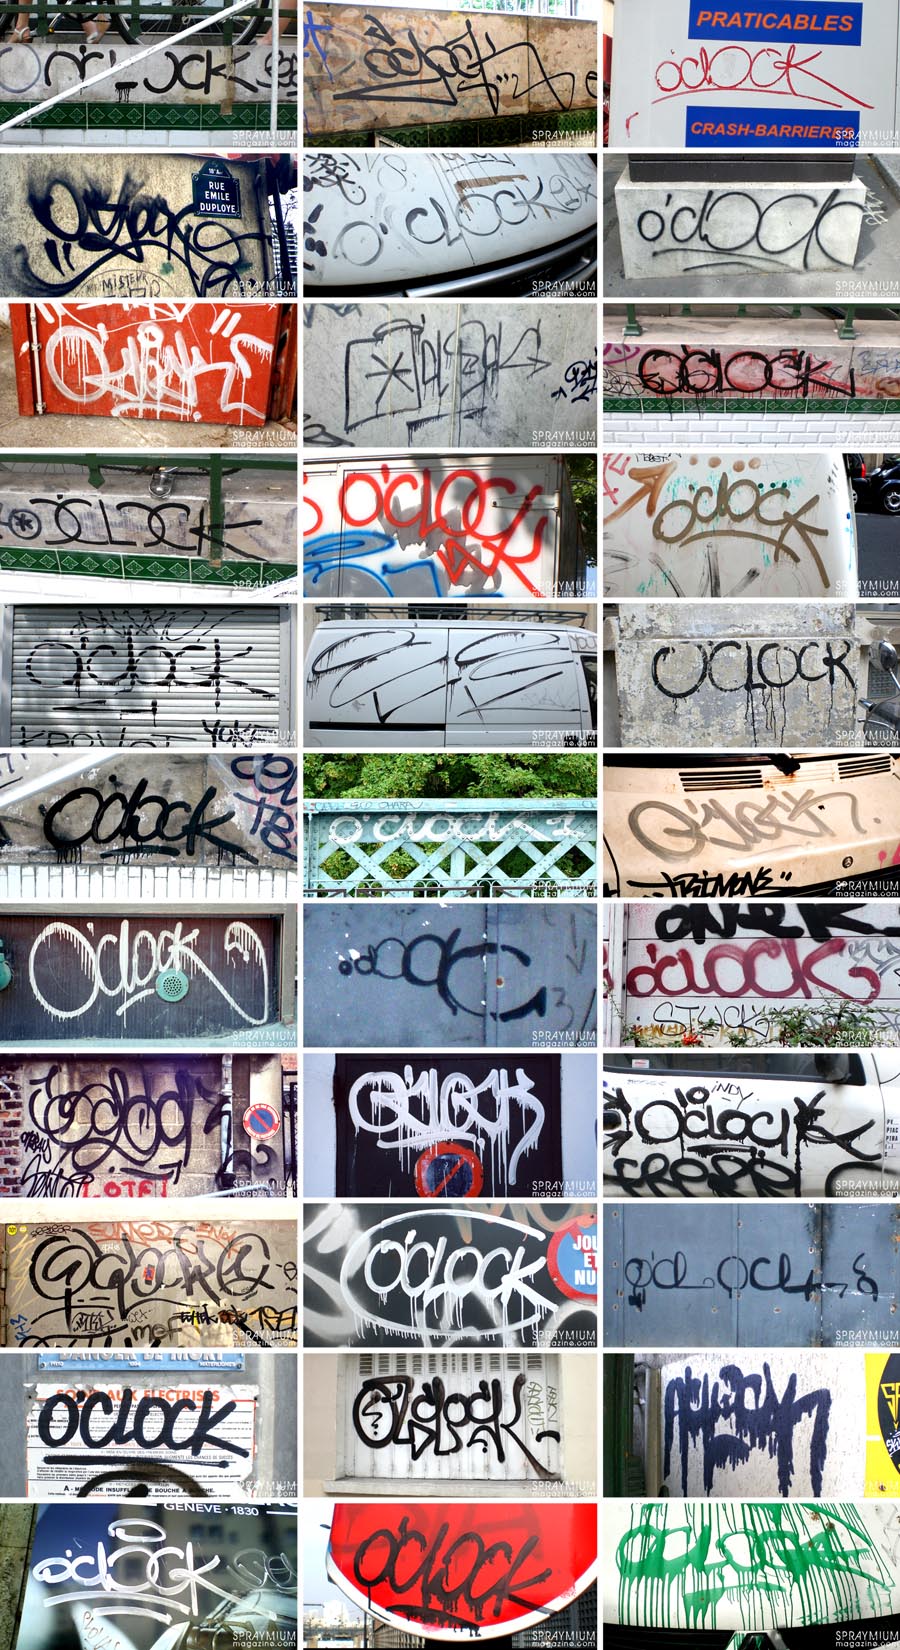 oclock tag writing bombing graffiti allcity handstyle spraymium